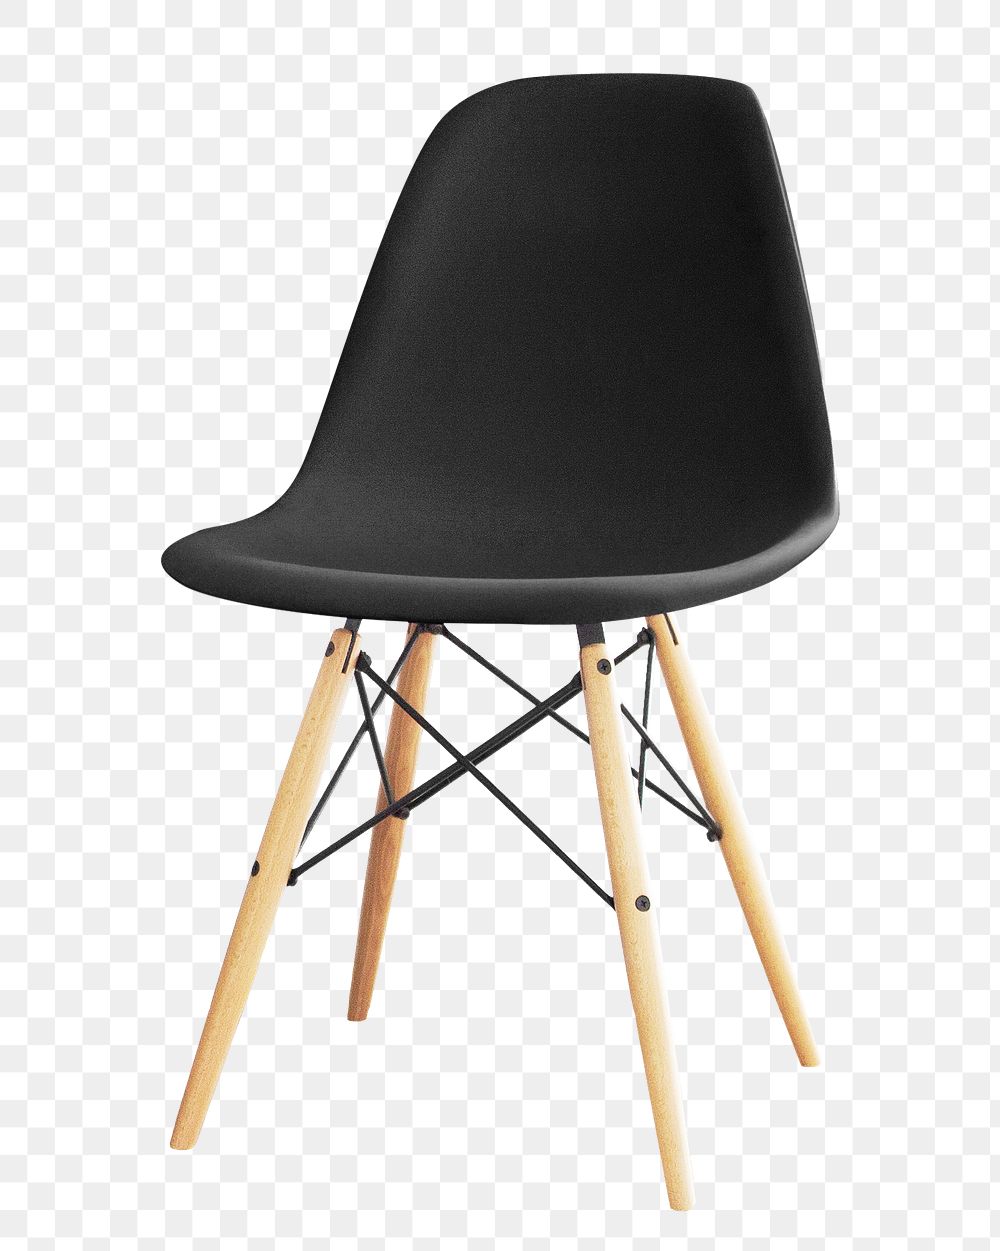 Black chair png sticker, transparent background